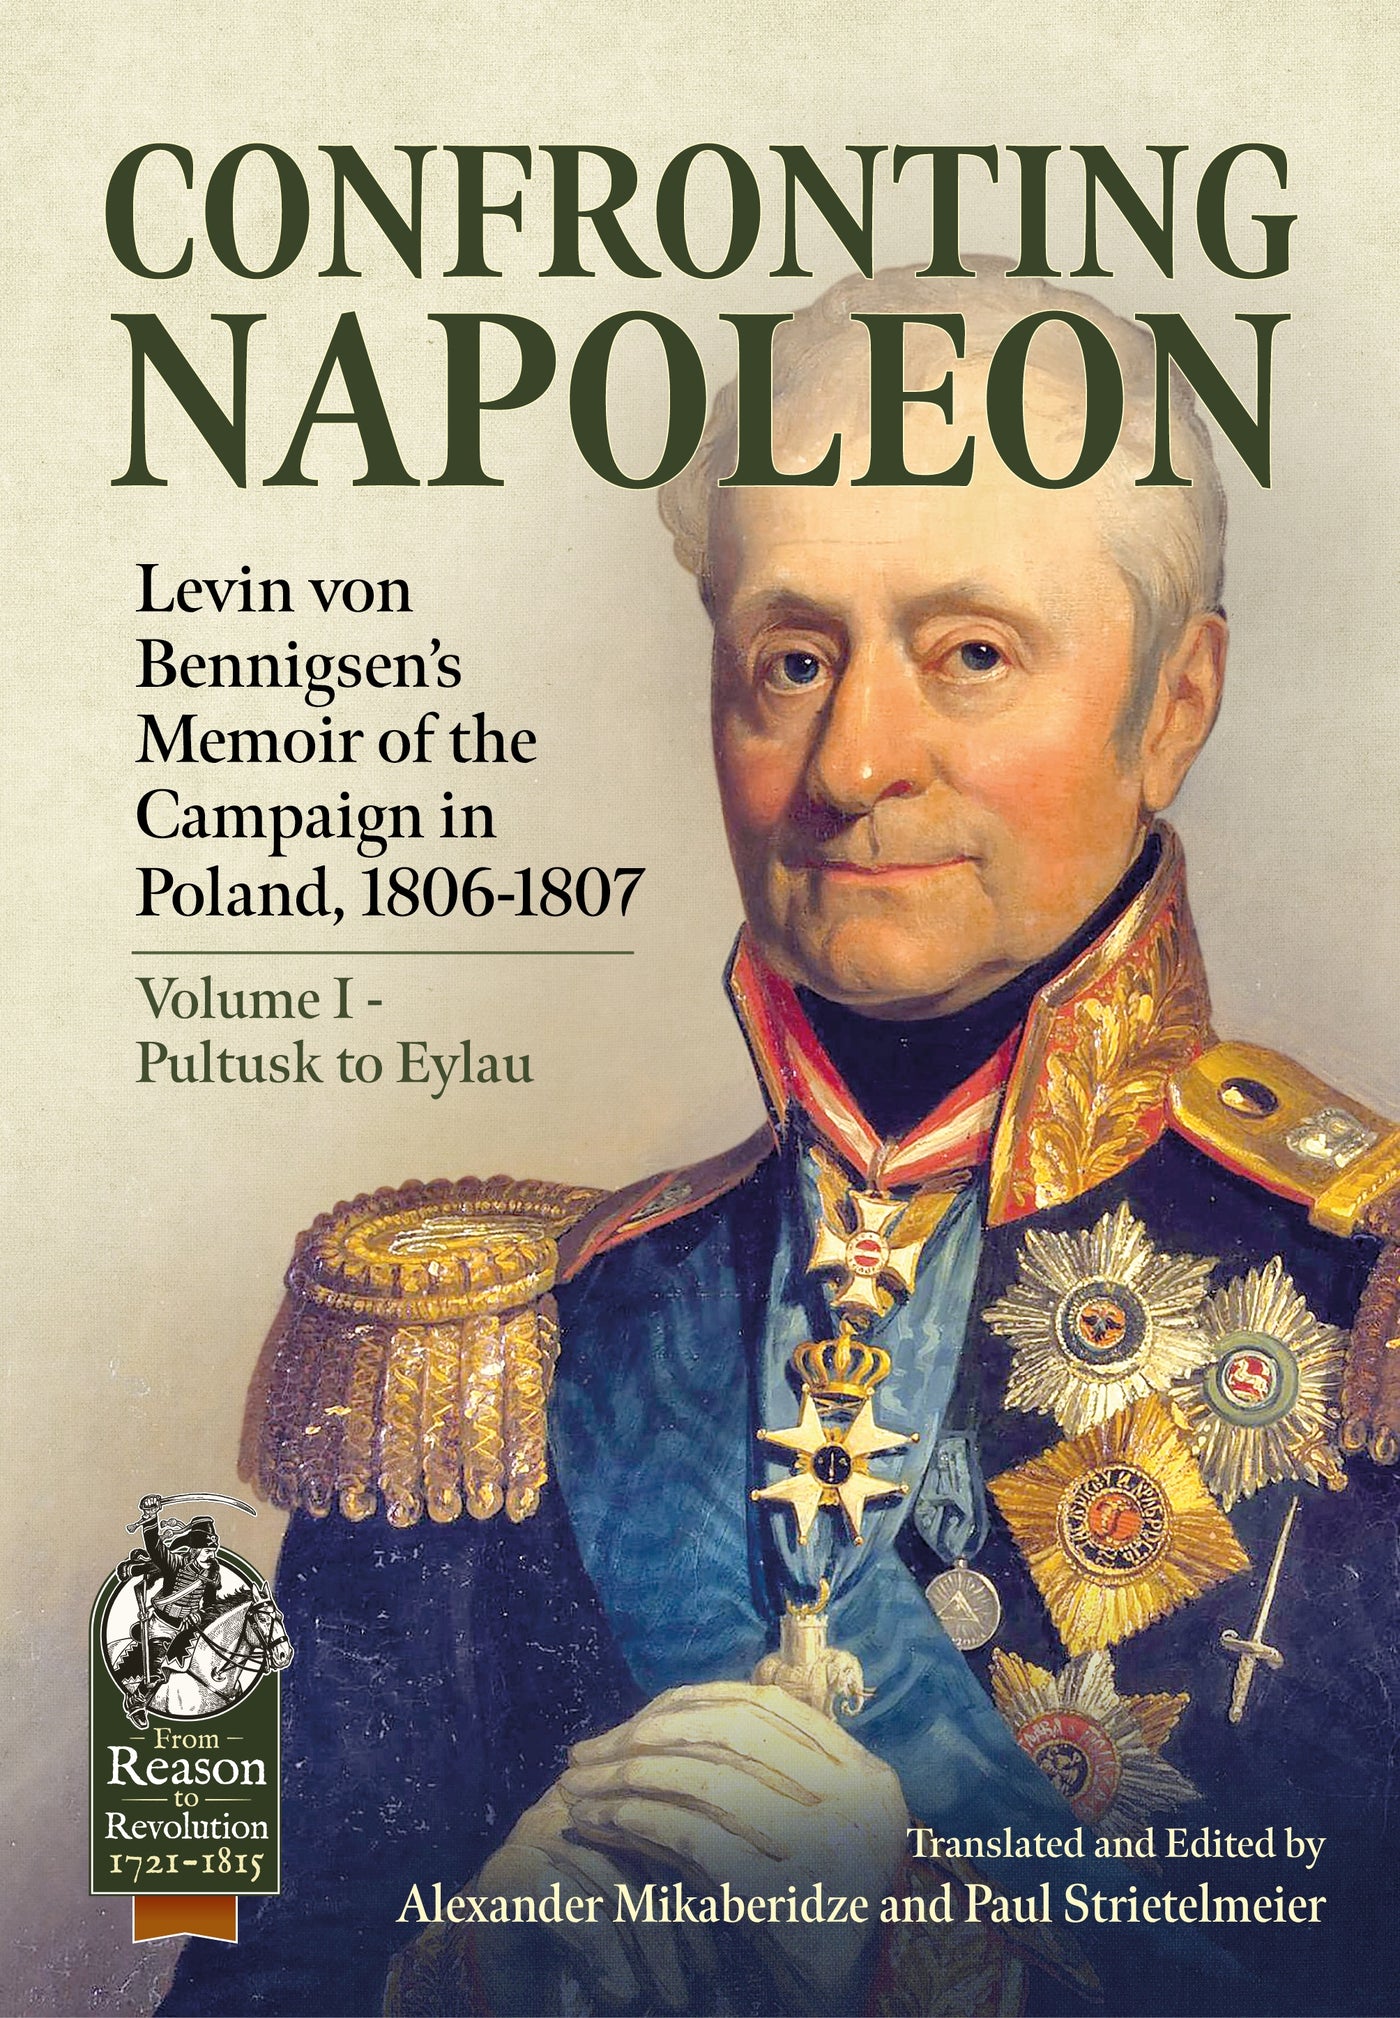 Confronting Napoleon